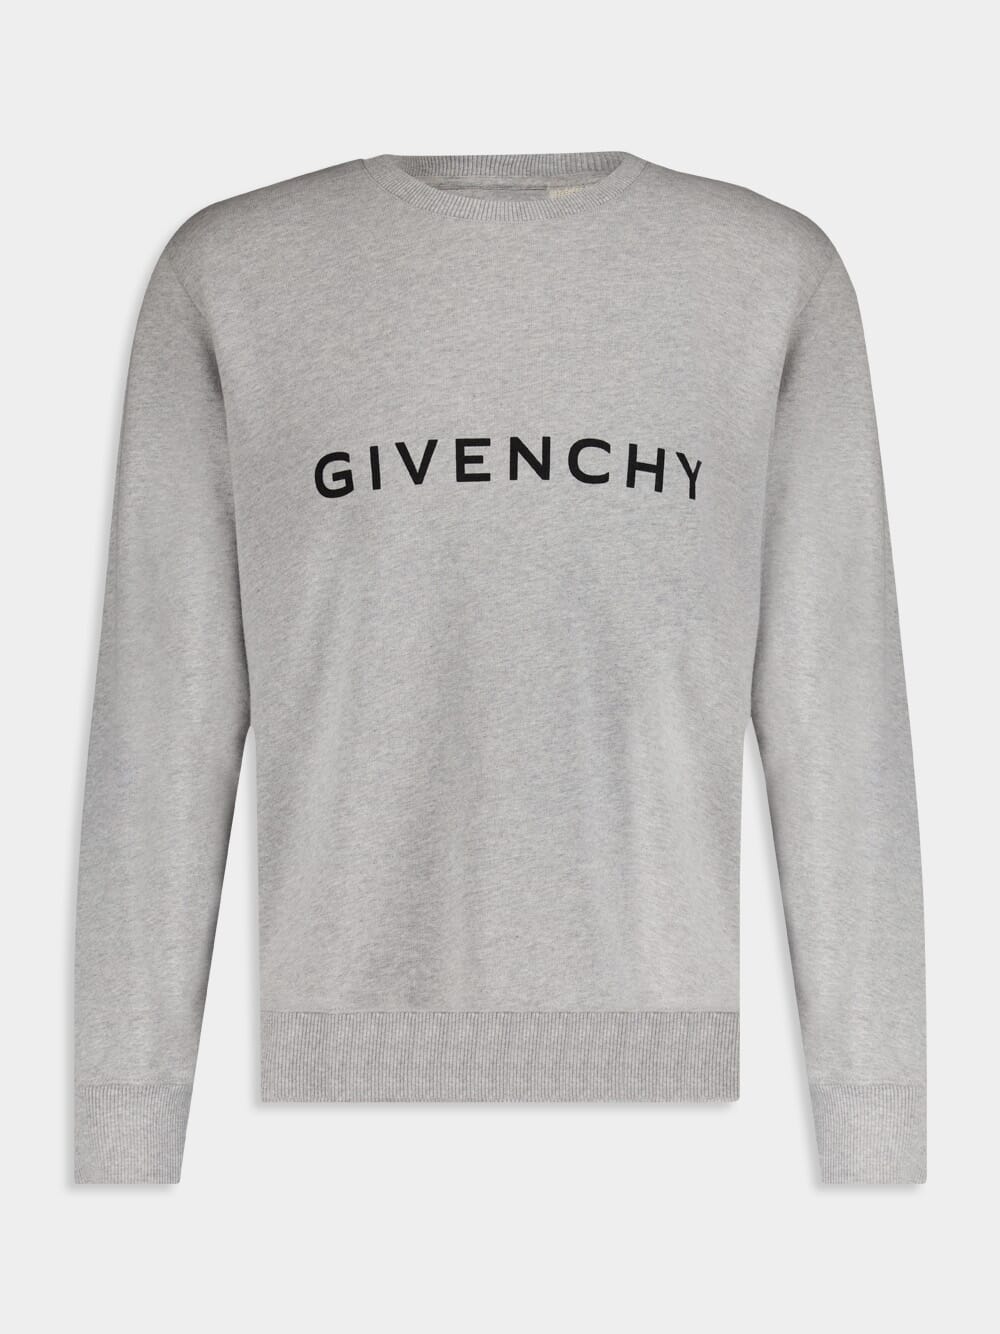 GivenchyArchetype Slim Fit Grey Fleece Sweatshirt at Fashion Clinic